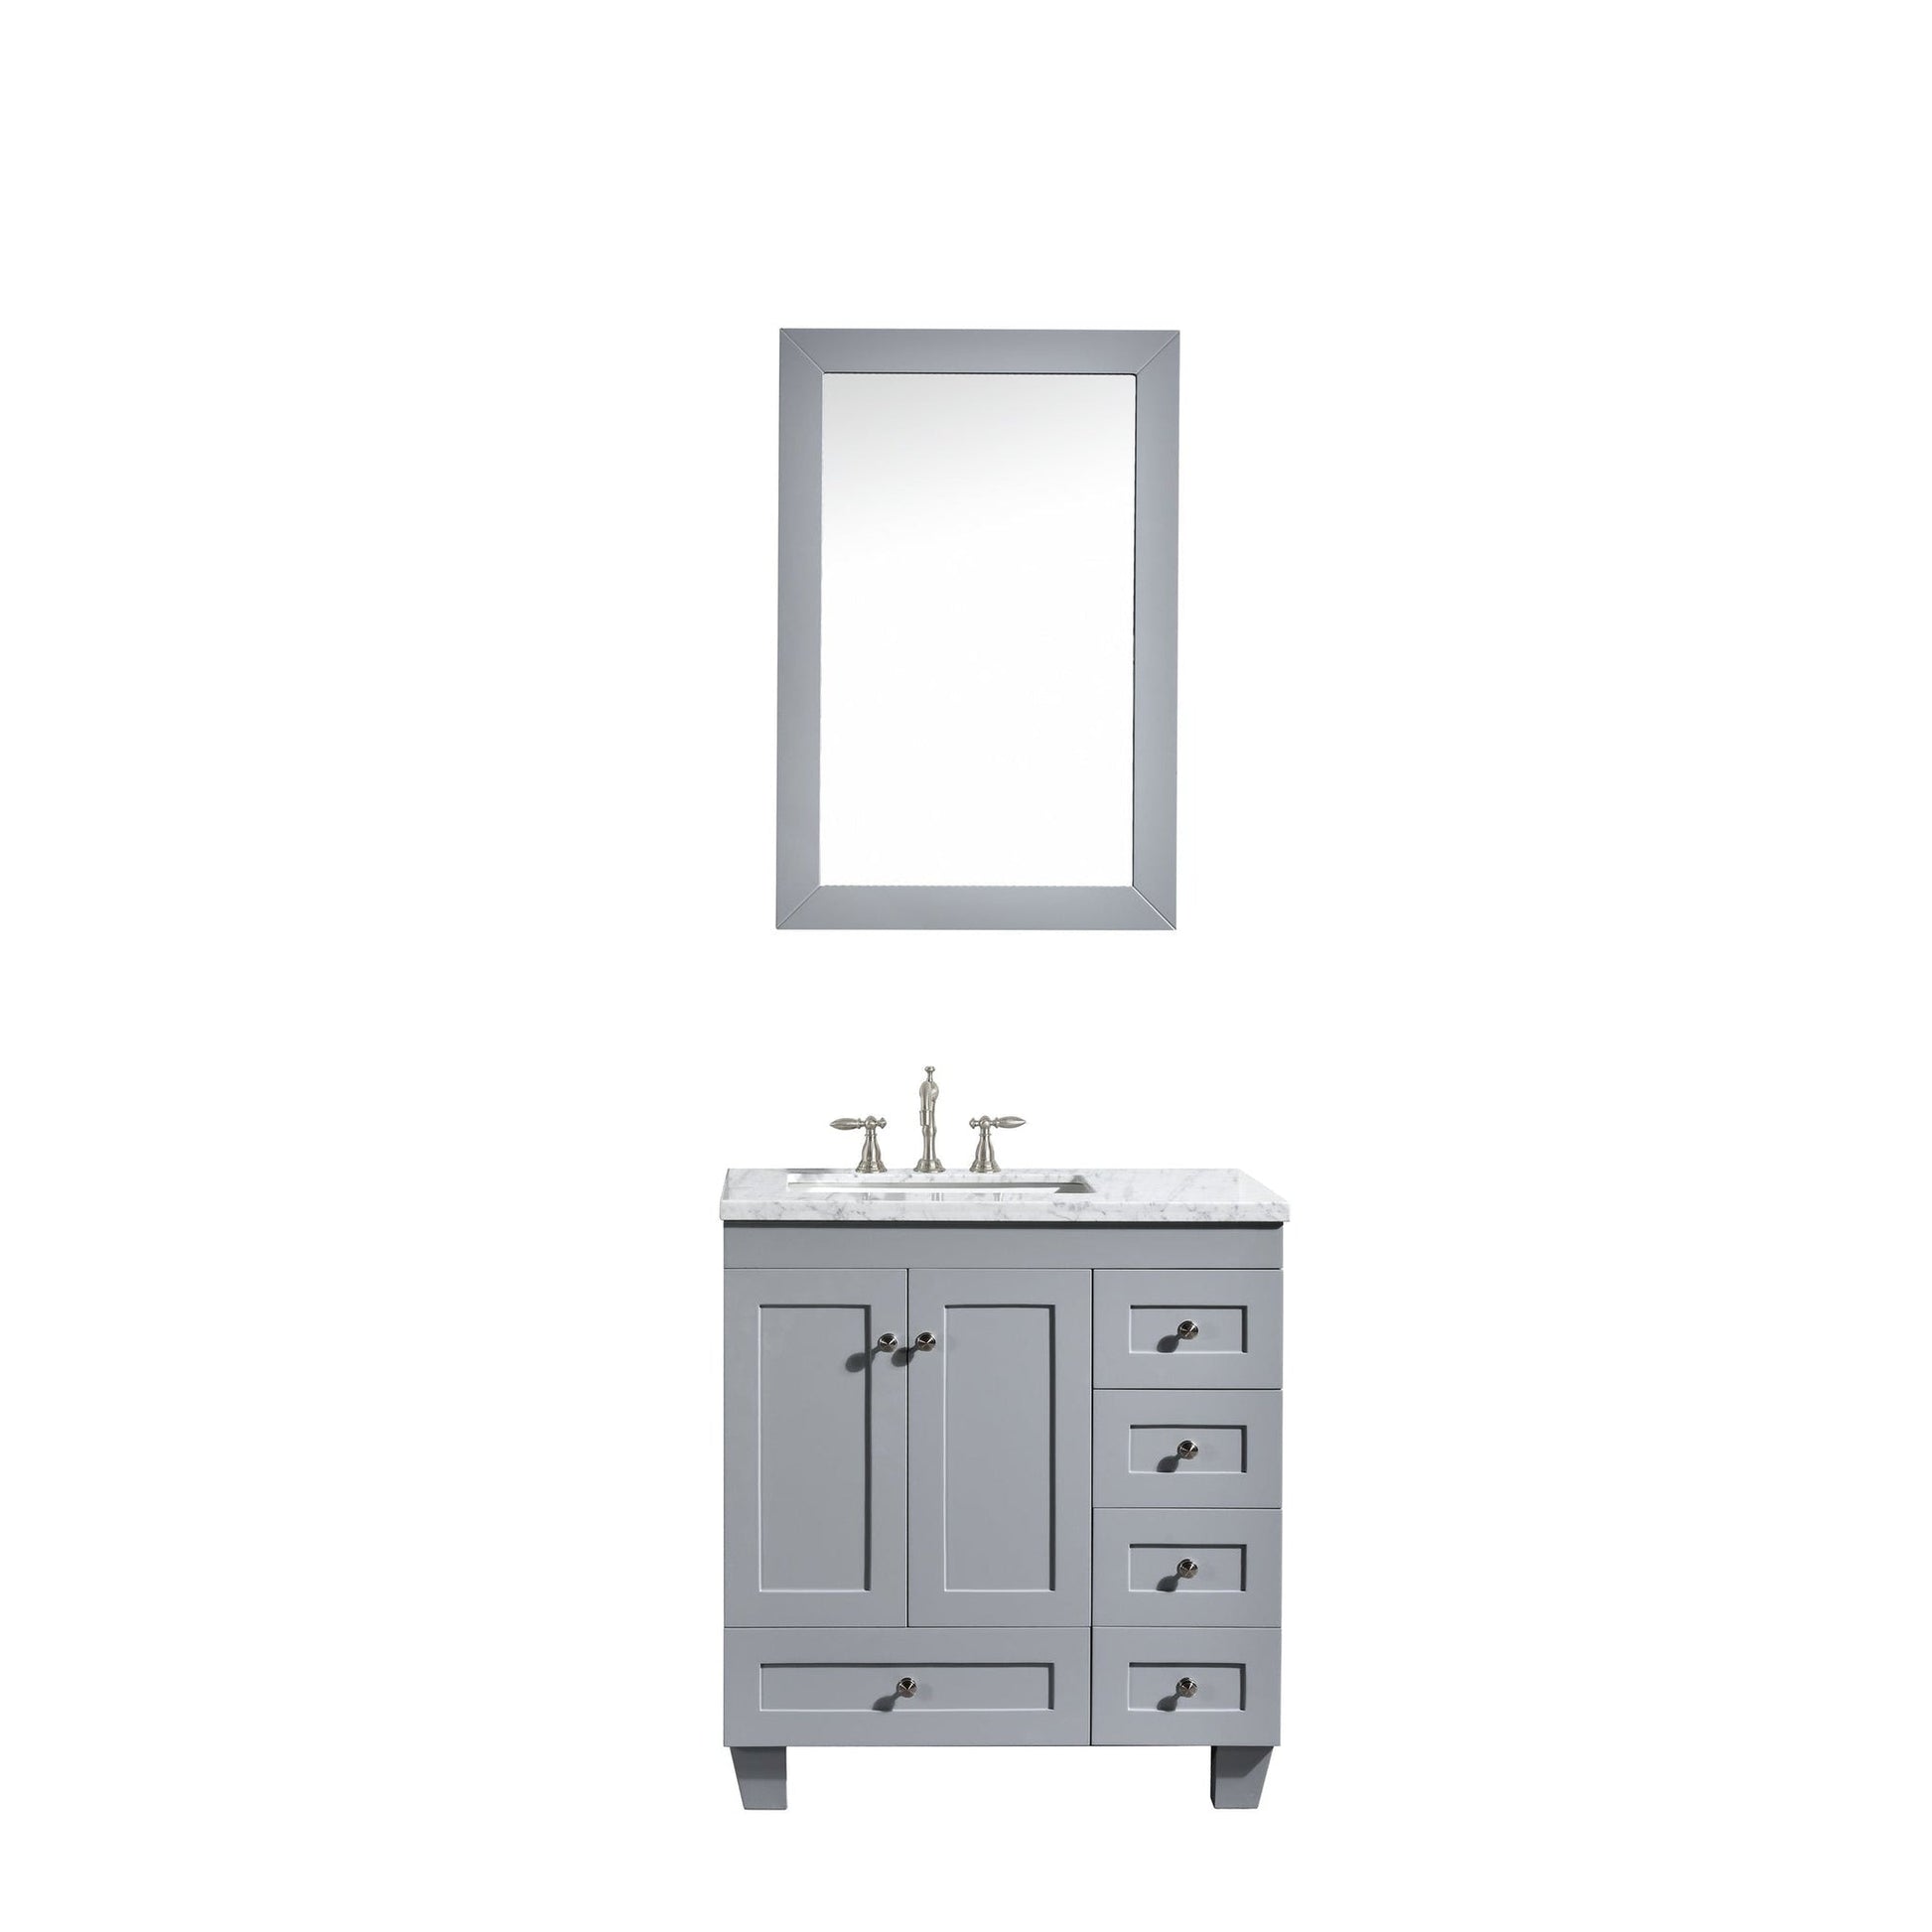 Eviva Acclaim 28" x 34" Gray Freestanding Bathroom Vanity With White Carrara Marble Countertop and Single Undermount Sink